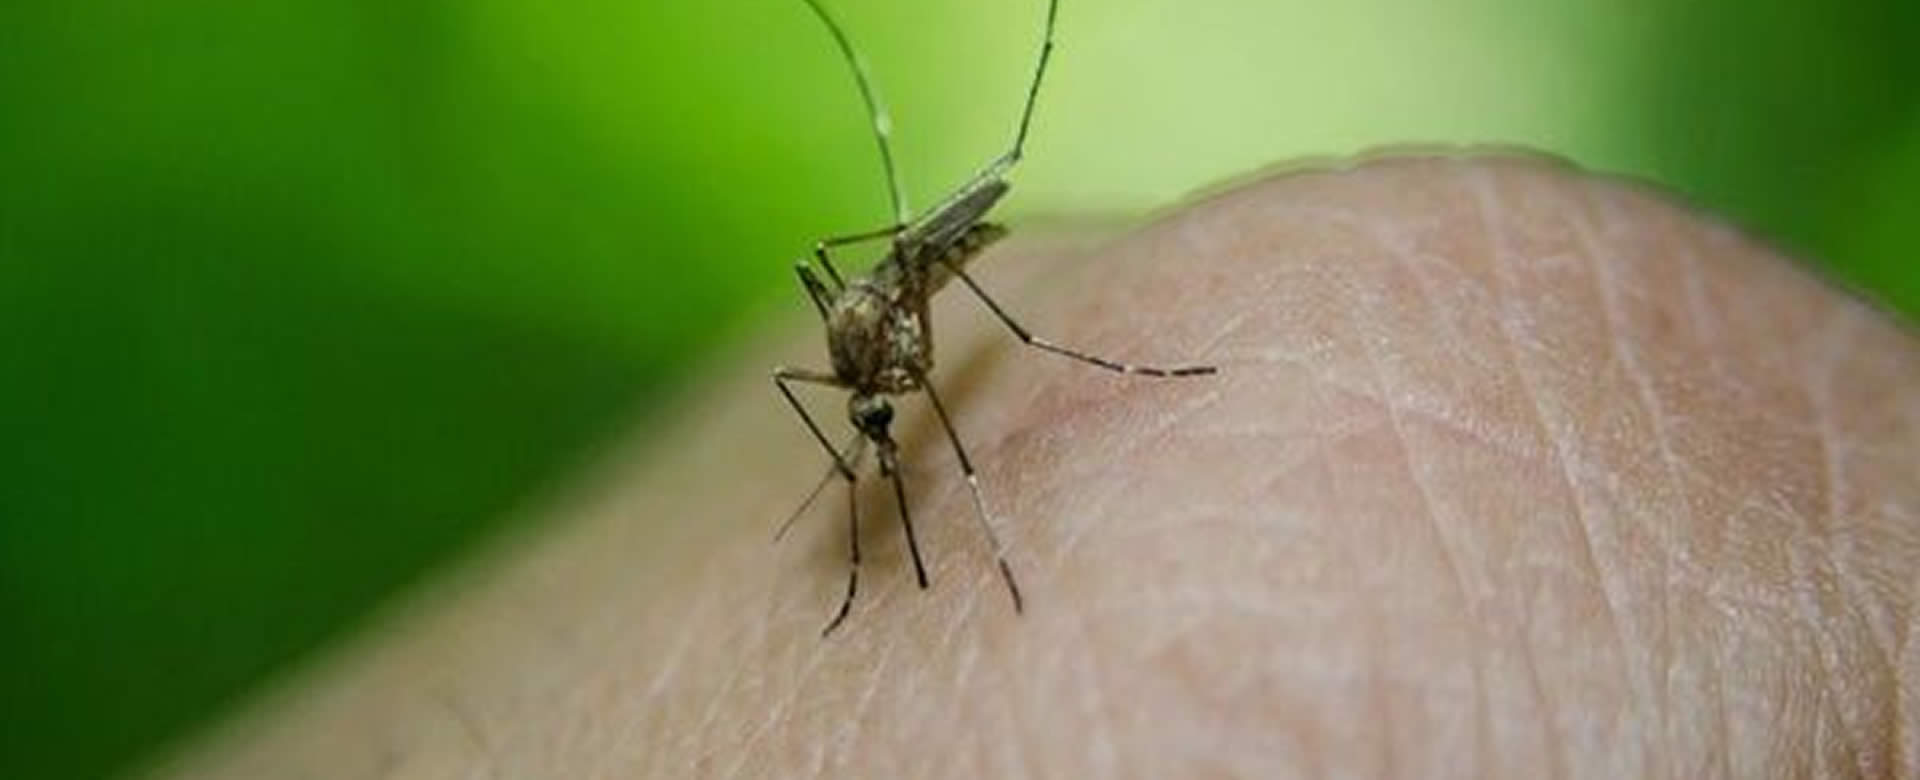 Nueva cepa africana del zika, otra epidemia que amenaza a Brasil